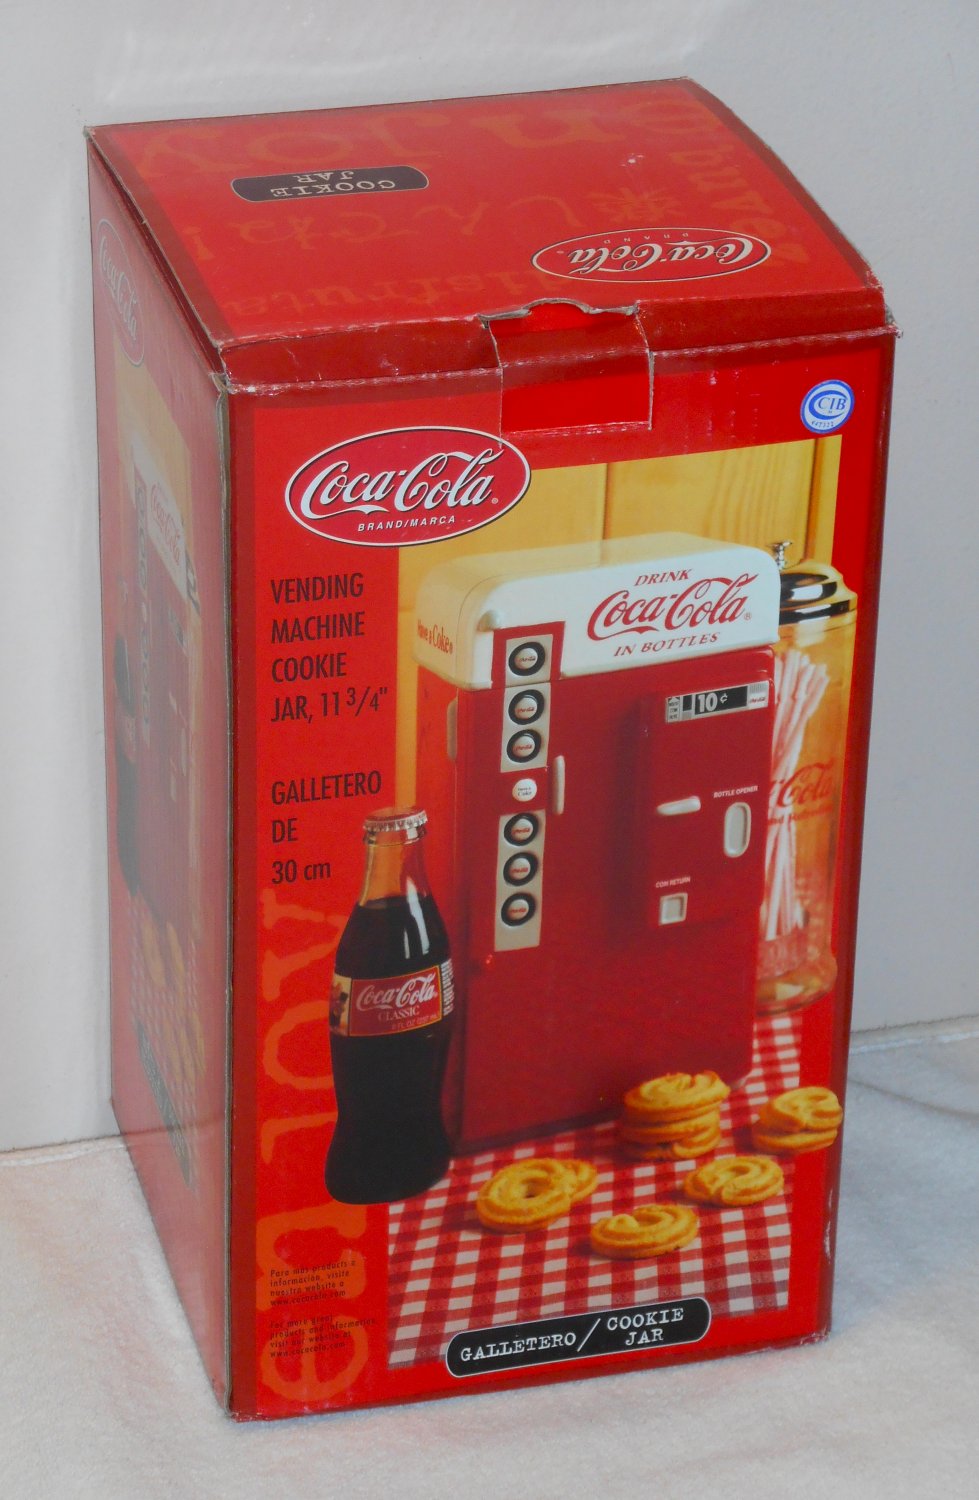 Coca-Cola Vending Machine Ceramic Cookie Jar Coke Gibson 2001